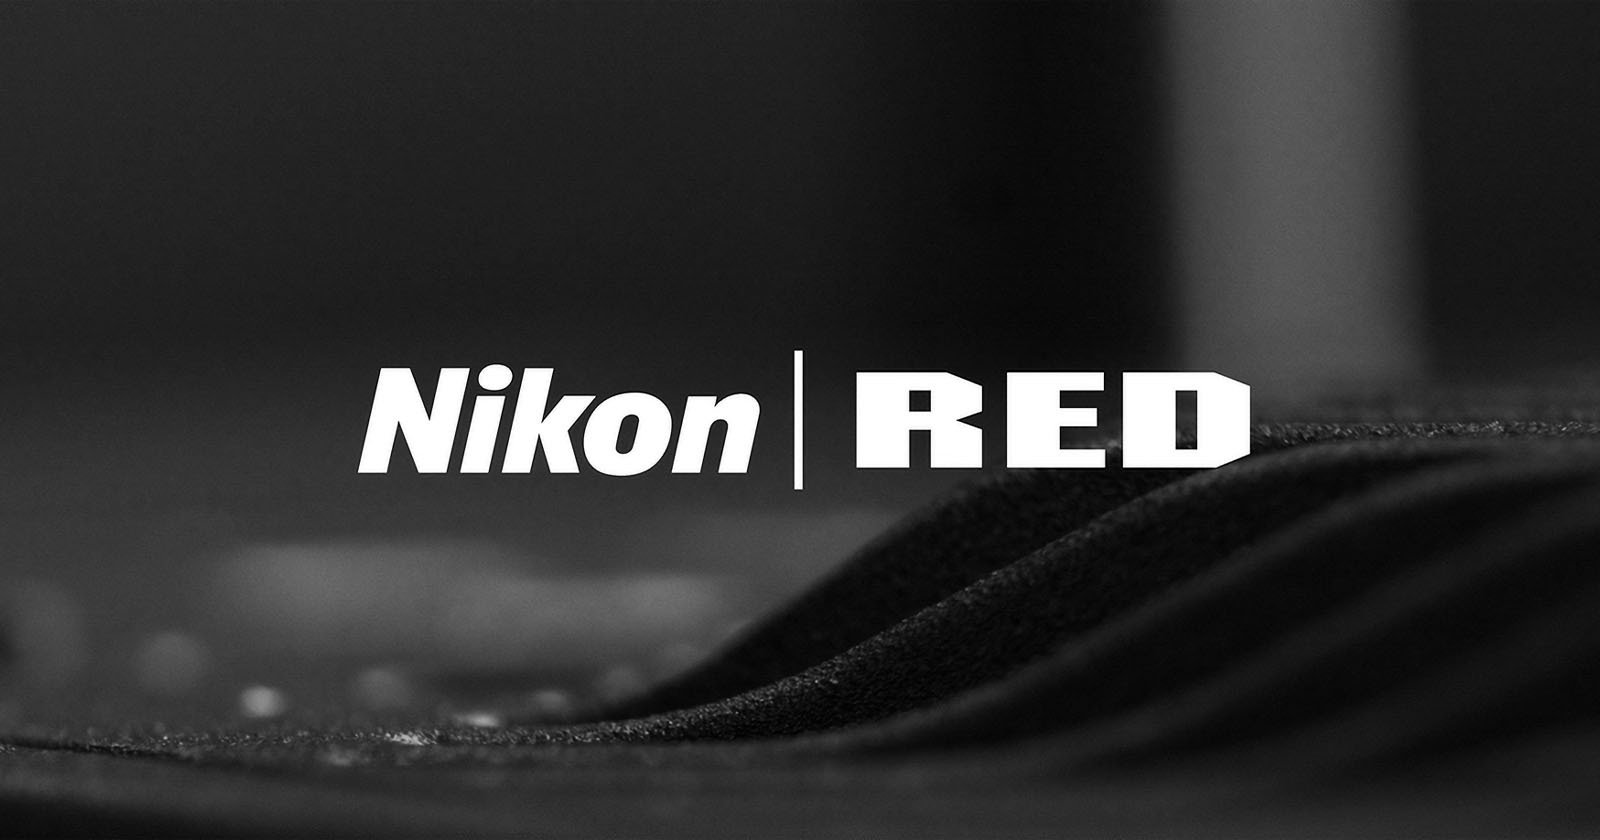 Nikon acquires RED